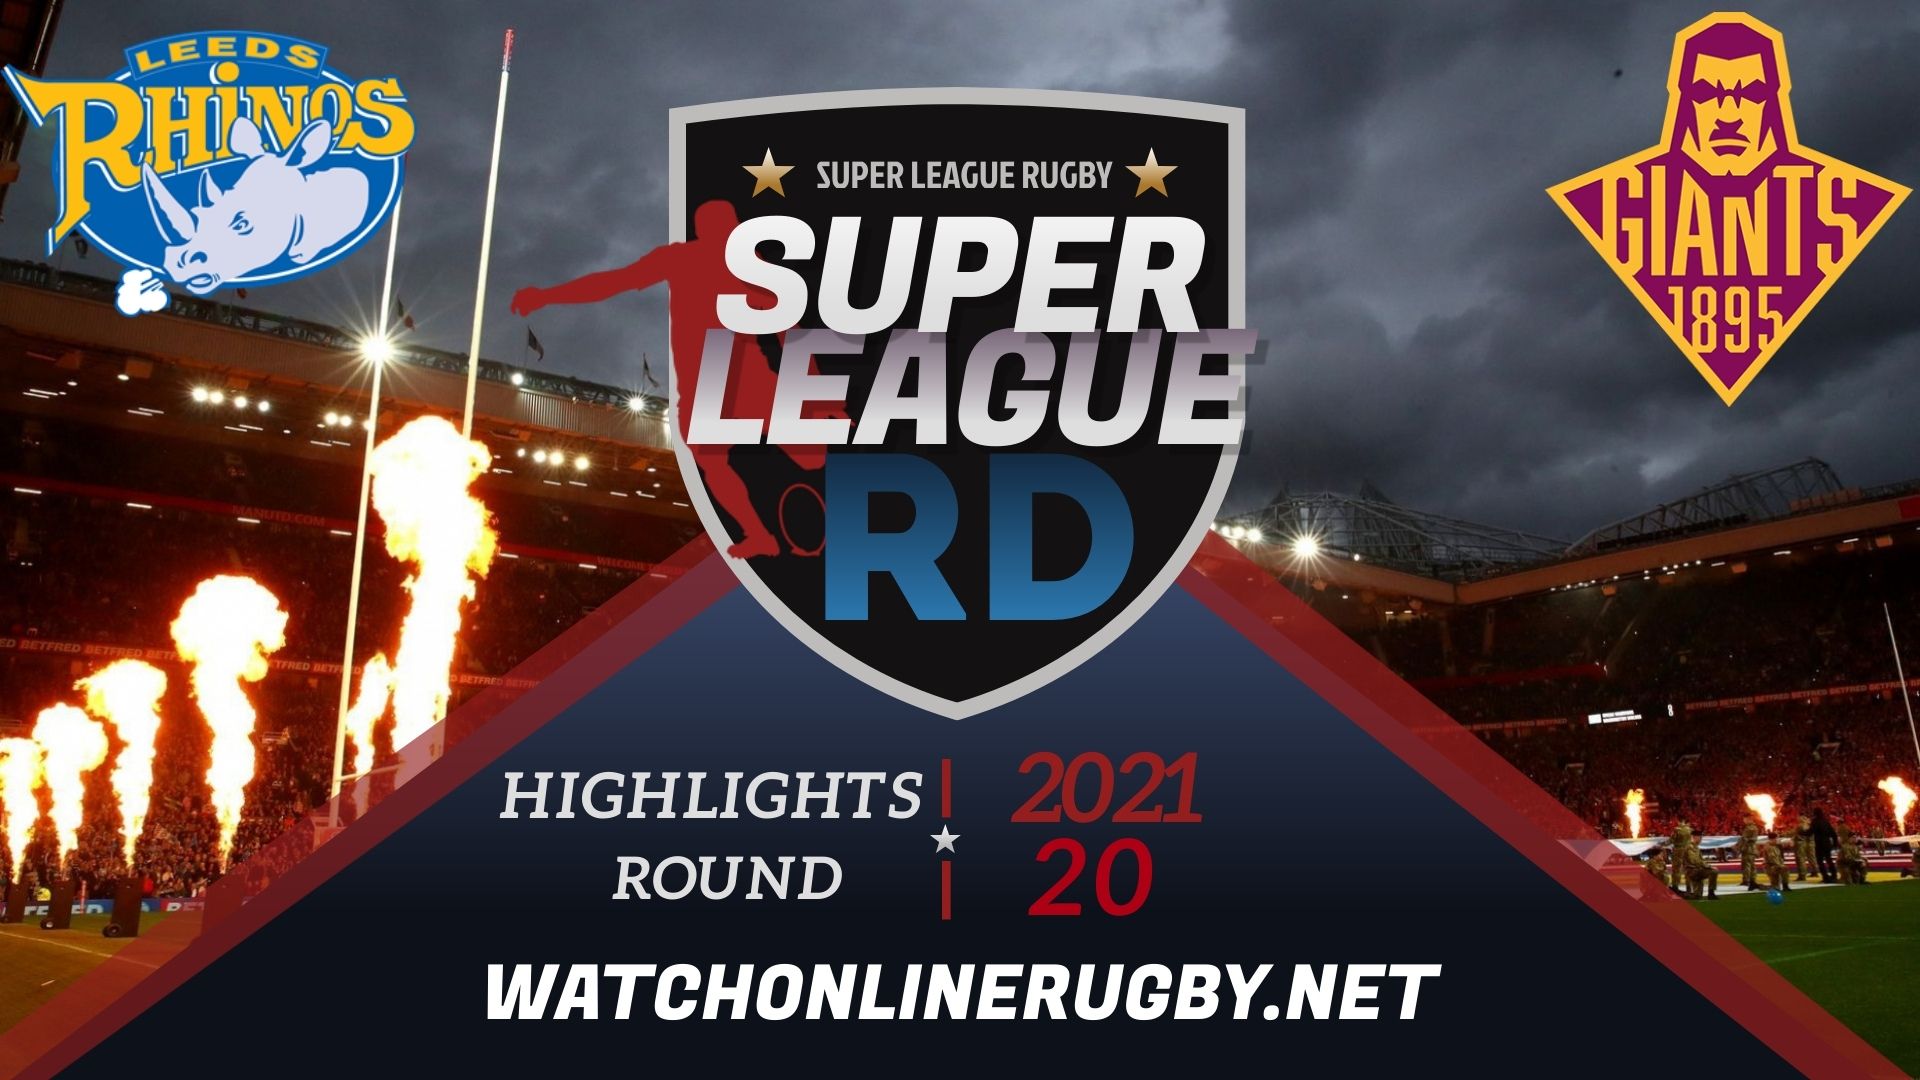 Leeds Rhinos Vs Huddersfield Giants Super League Rugby 2021 RD 20